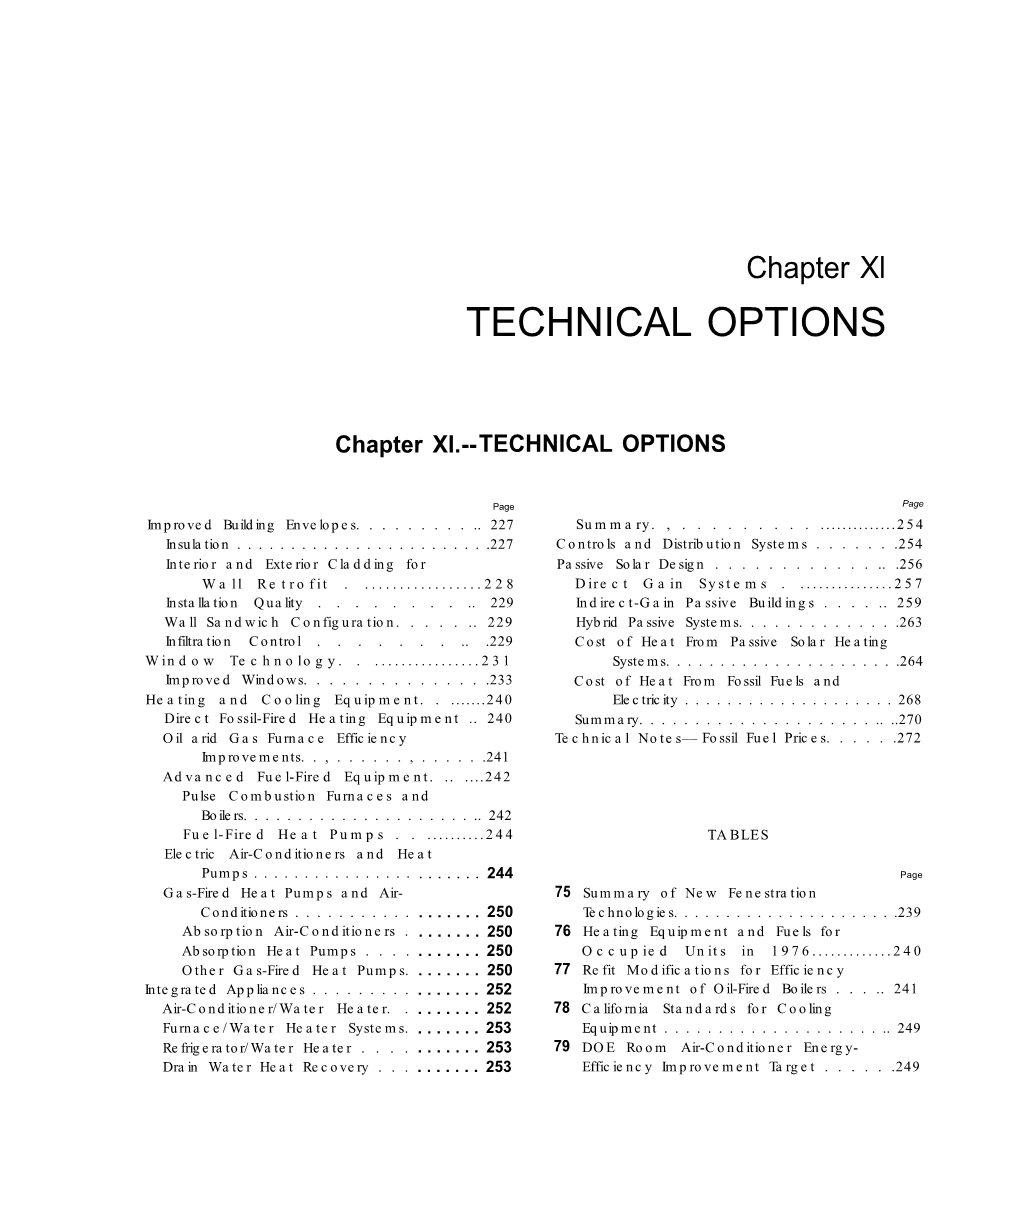 11: Technical Options